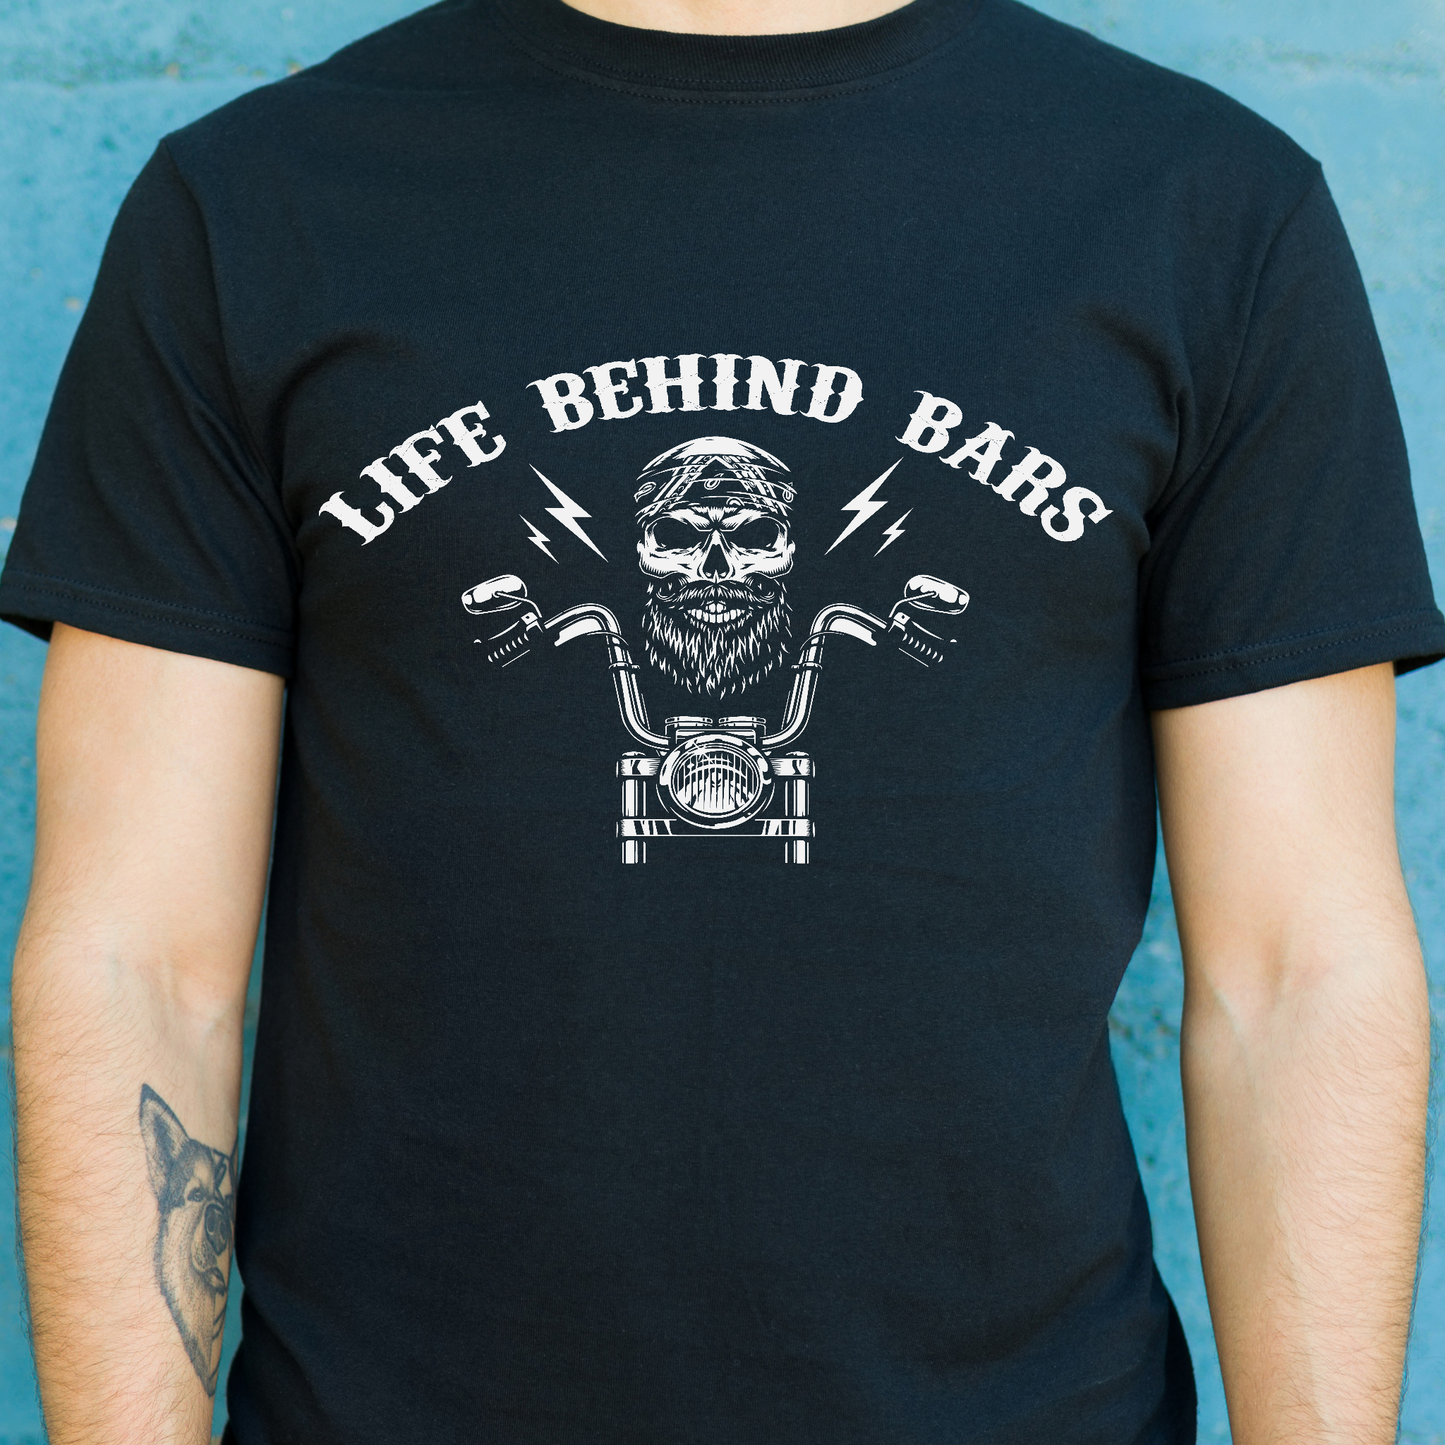 Life behind bars motorcycle badass Men's t-shirt - Premium t-shirt from Lees Krazy Teez - Just $19.95! Shop now at Lees Krazy Teez